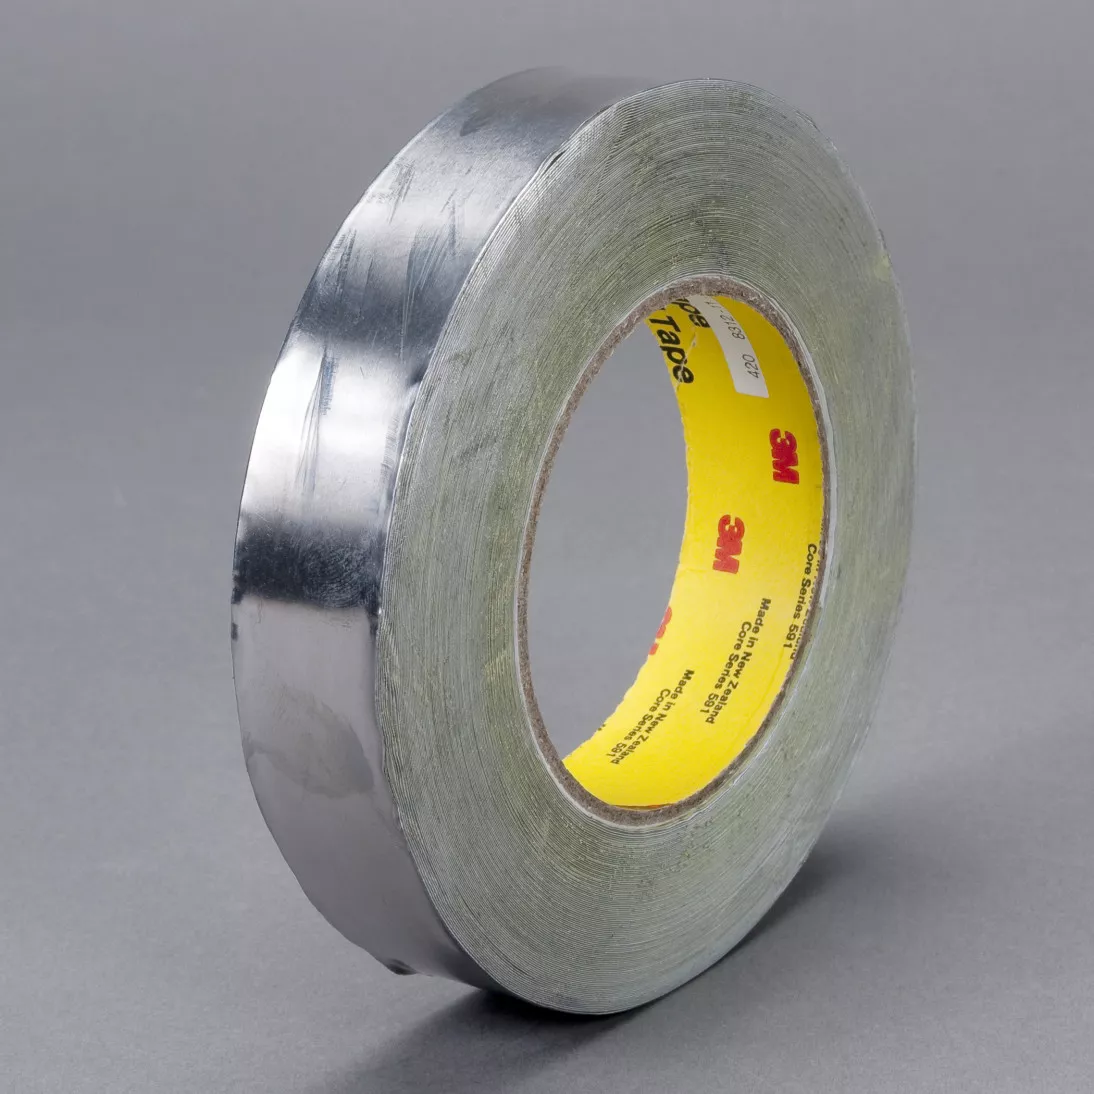 3M™ Lead Foil Tape 420, Dark Silver, 1 in x 36 yd, 6.8 mil, 9 rolls per
case